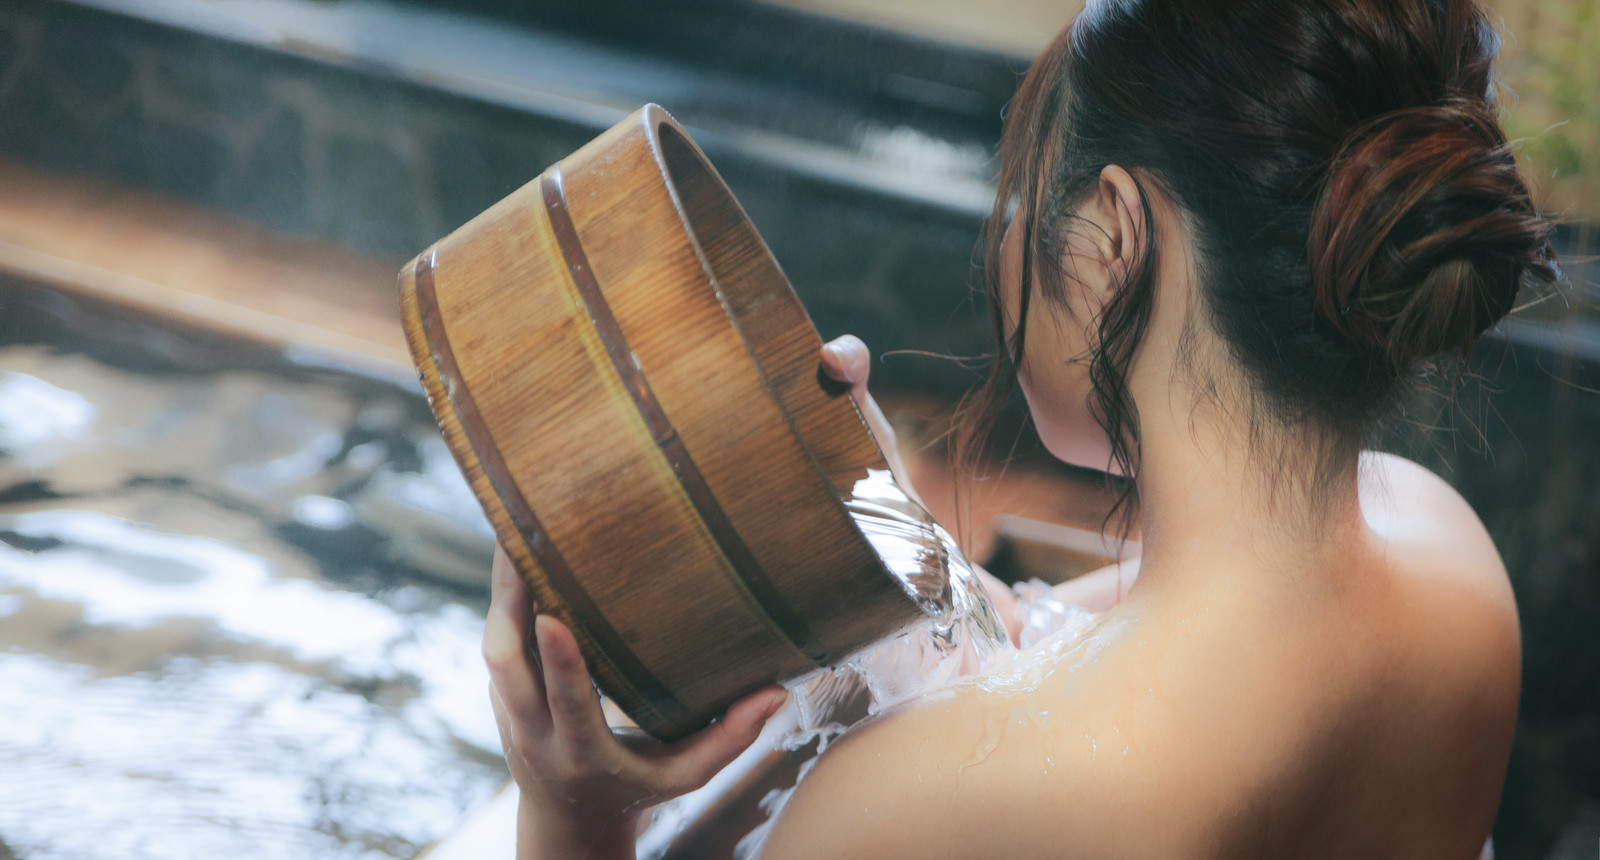 13 Japanese teen boys caught peeping into girls hot spring bath during class trip SoraNews24 -Japan News- photo